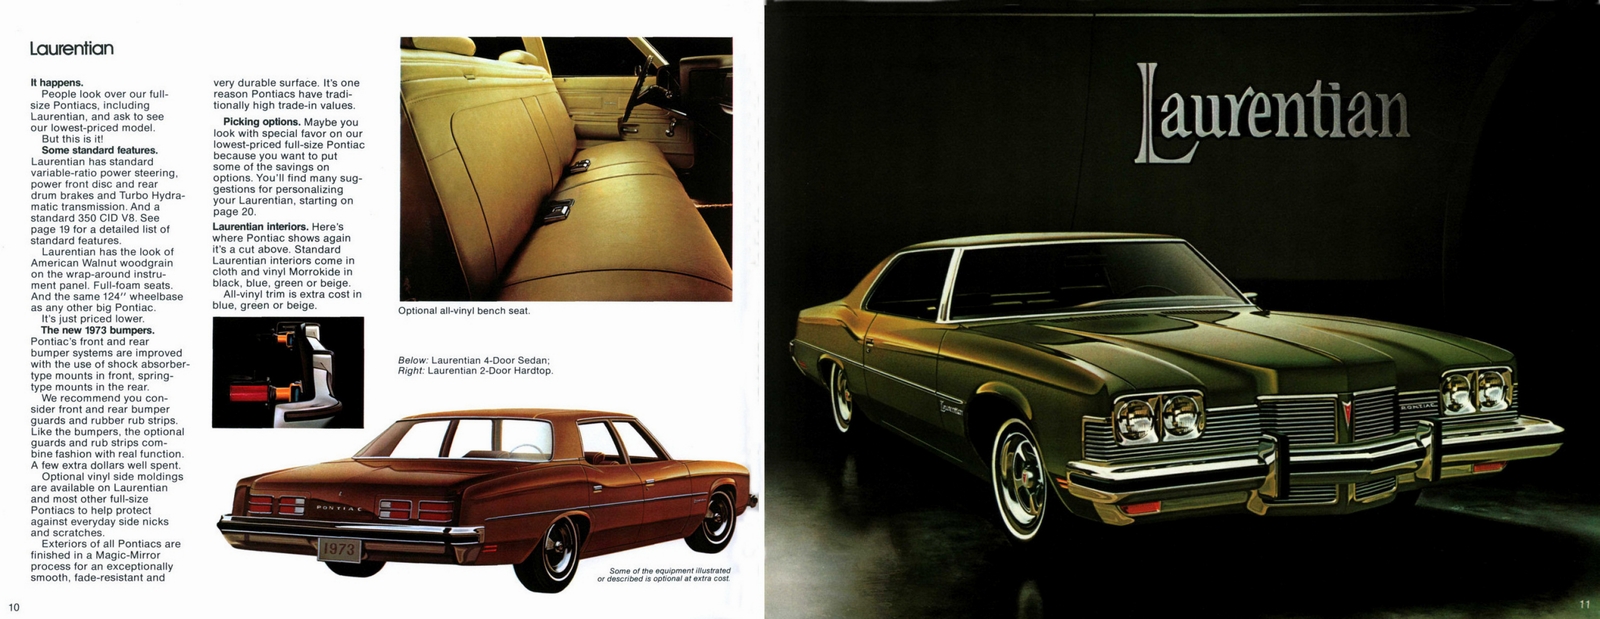 n_1973 Pontiac Full Size (Cdn)-10-11.jpg